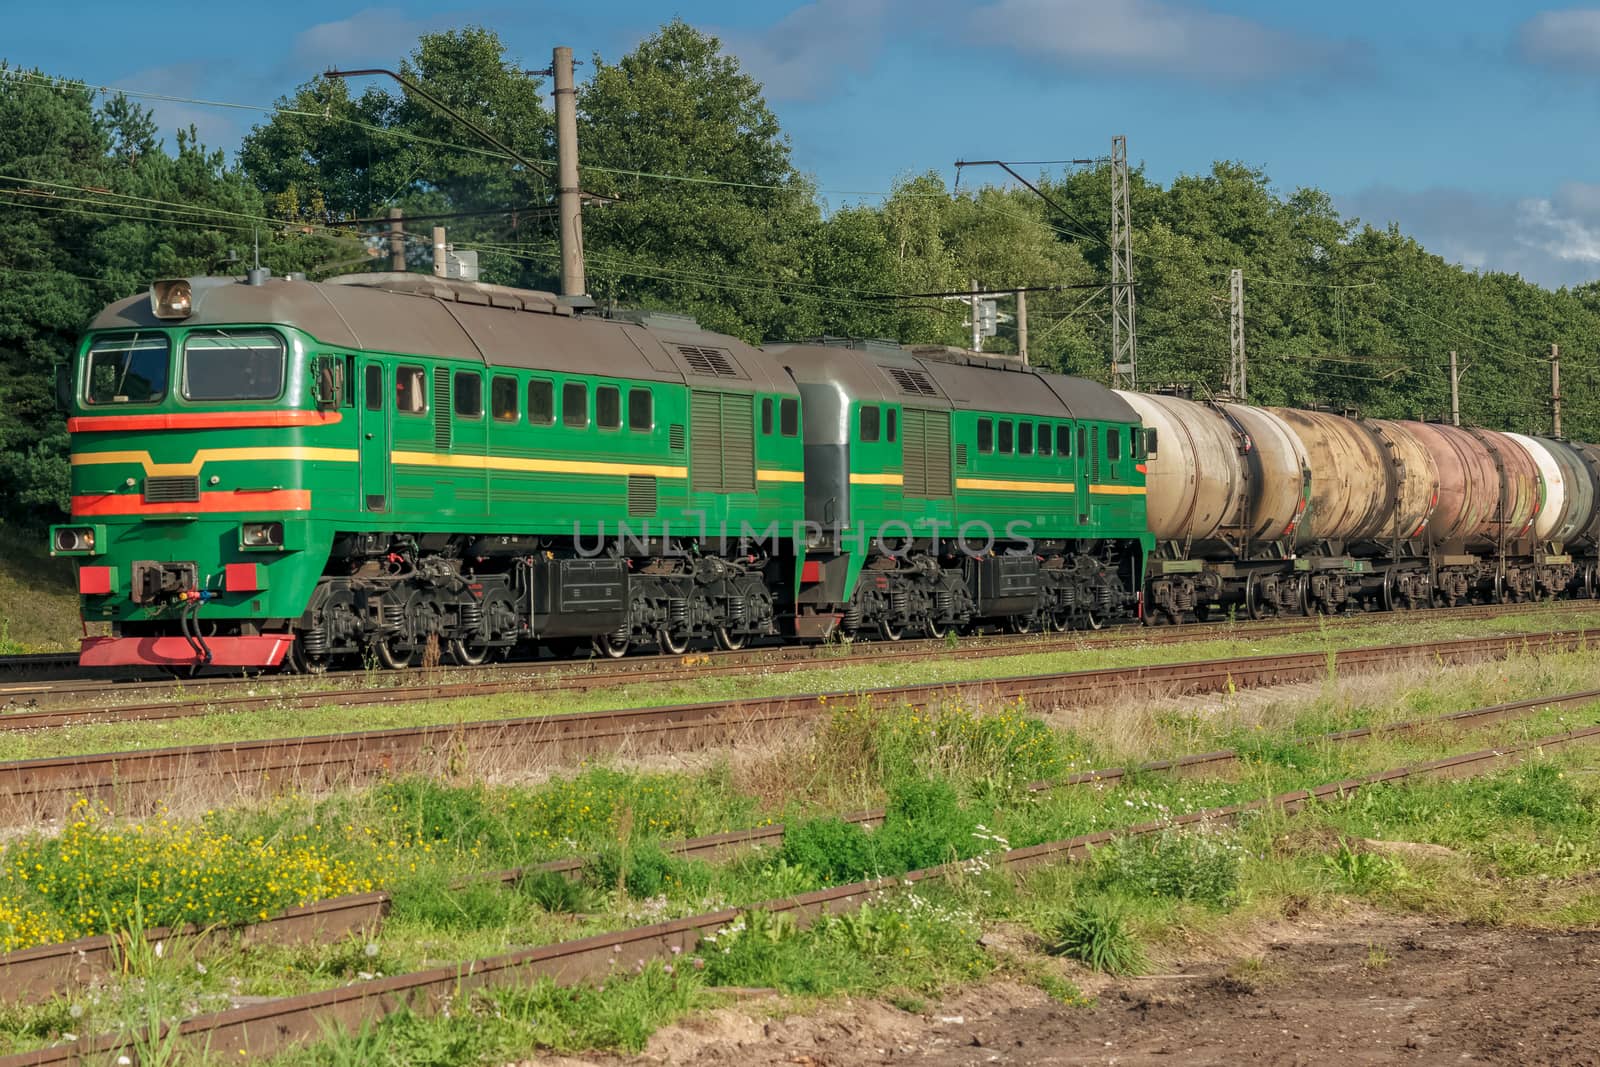 Green freight train by sengnsp